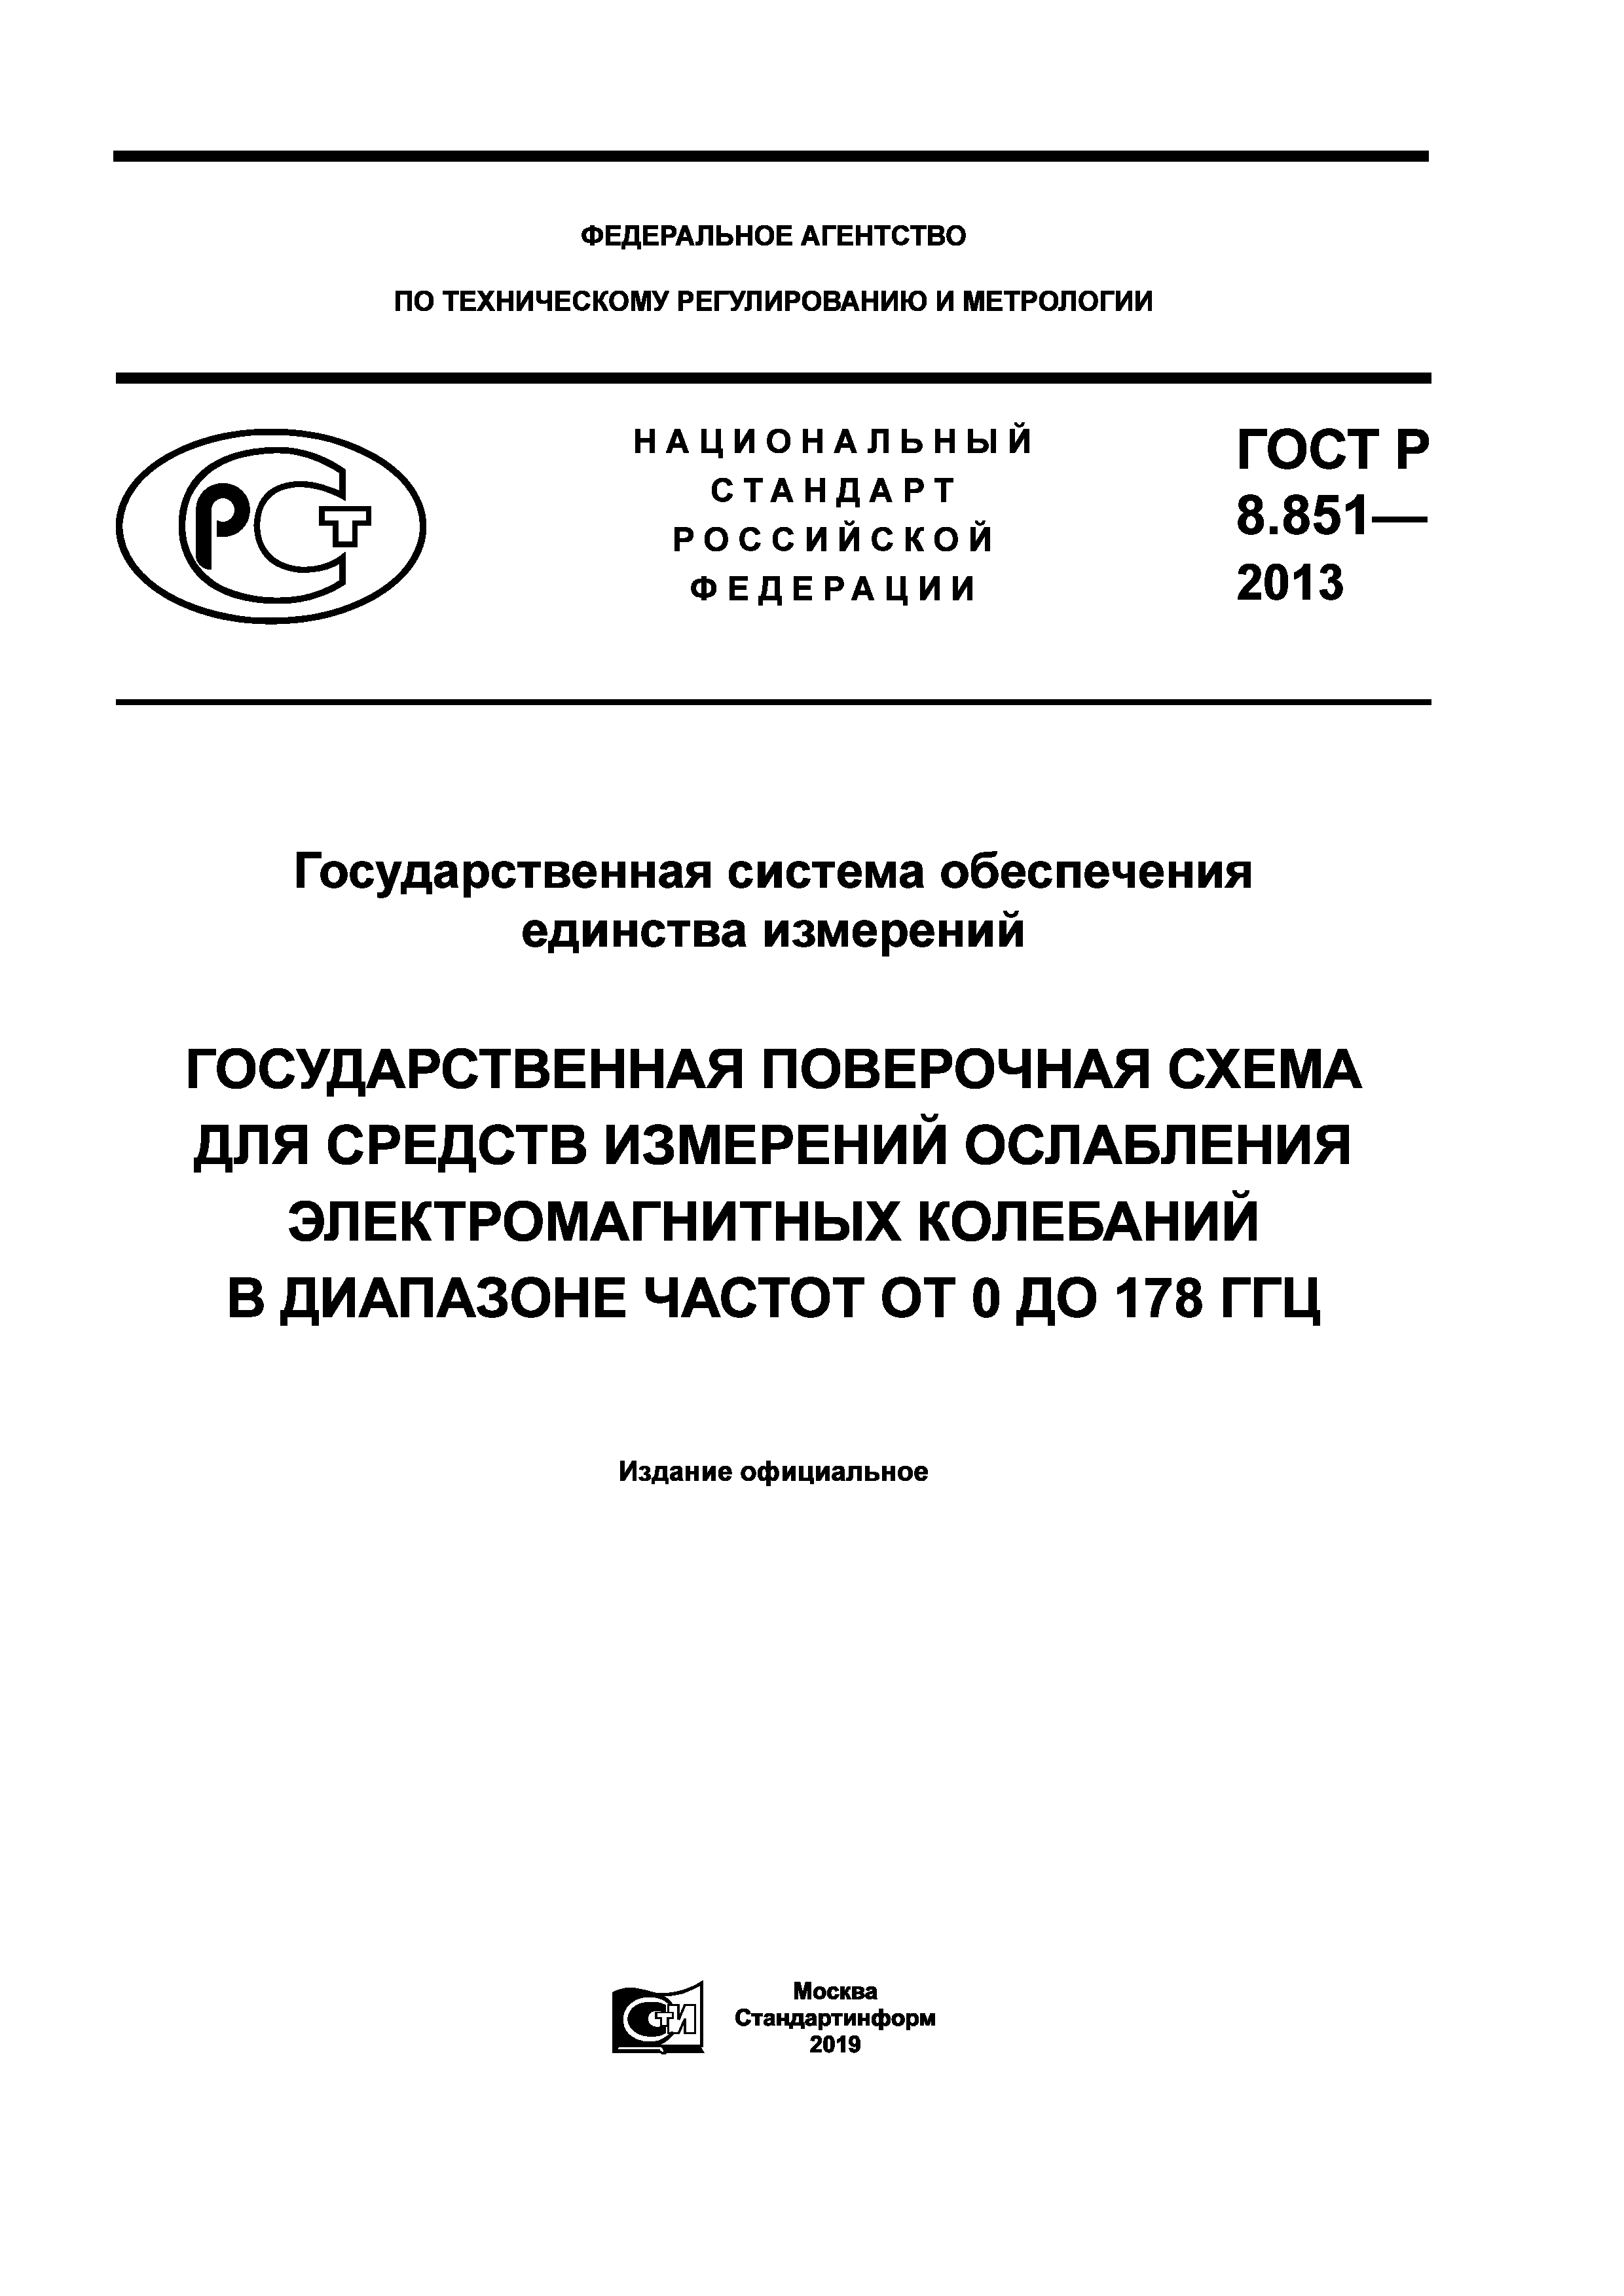 ГОСТ Р 8.851-2013